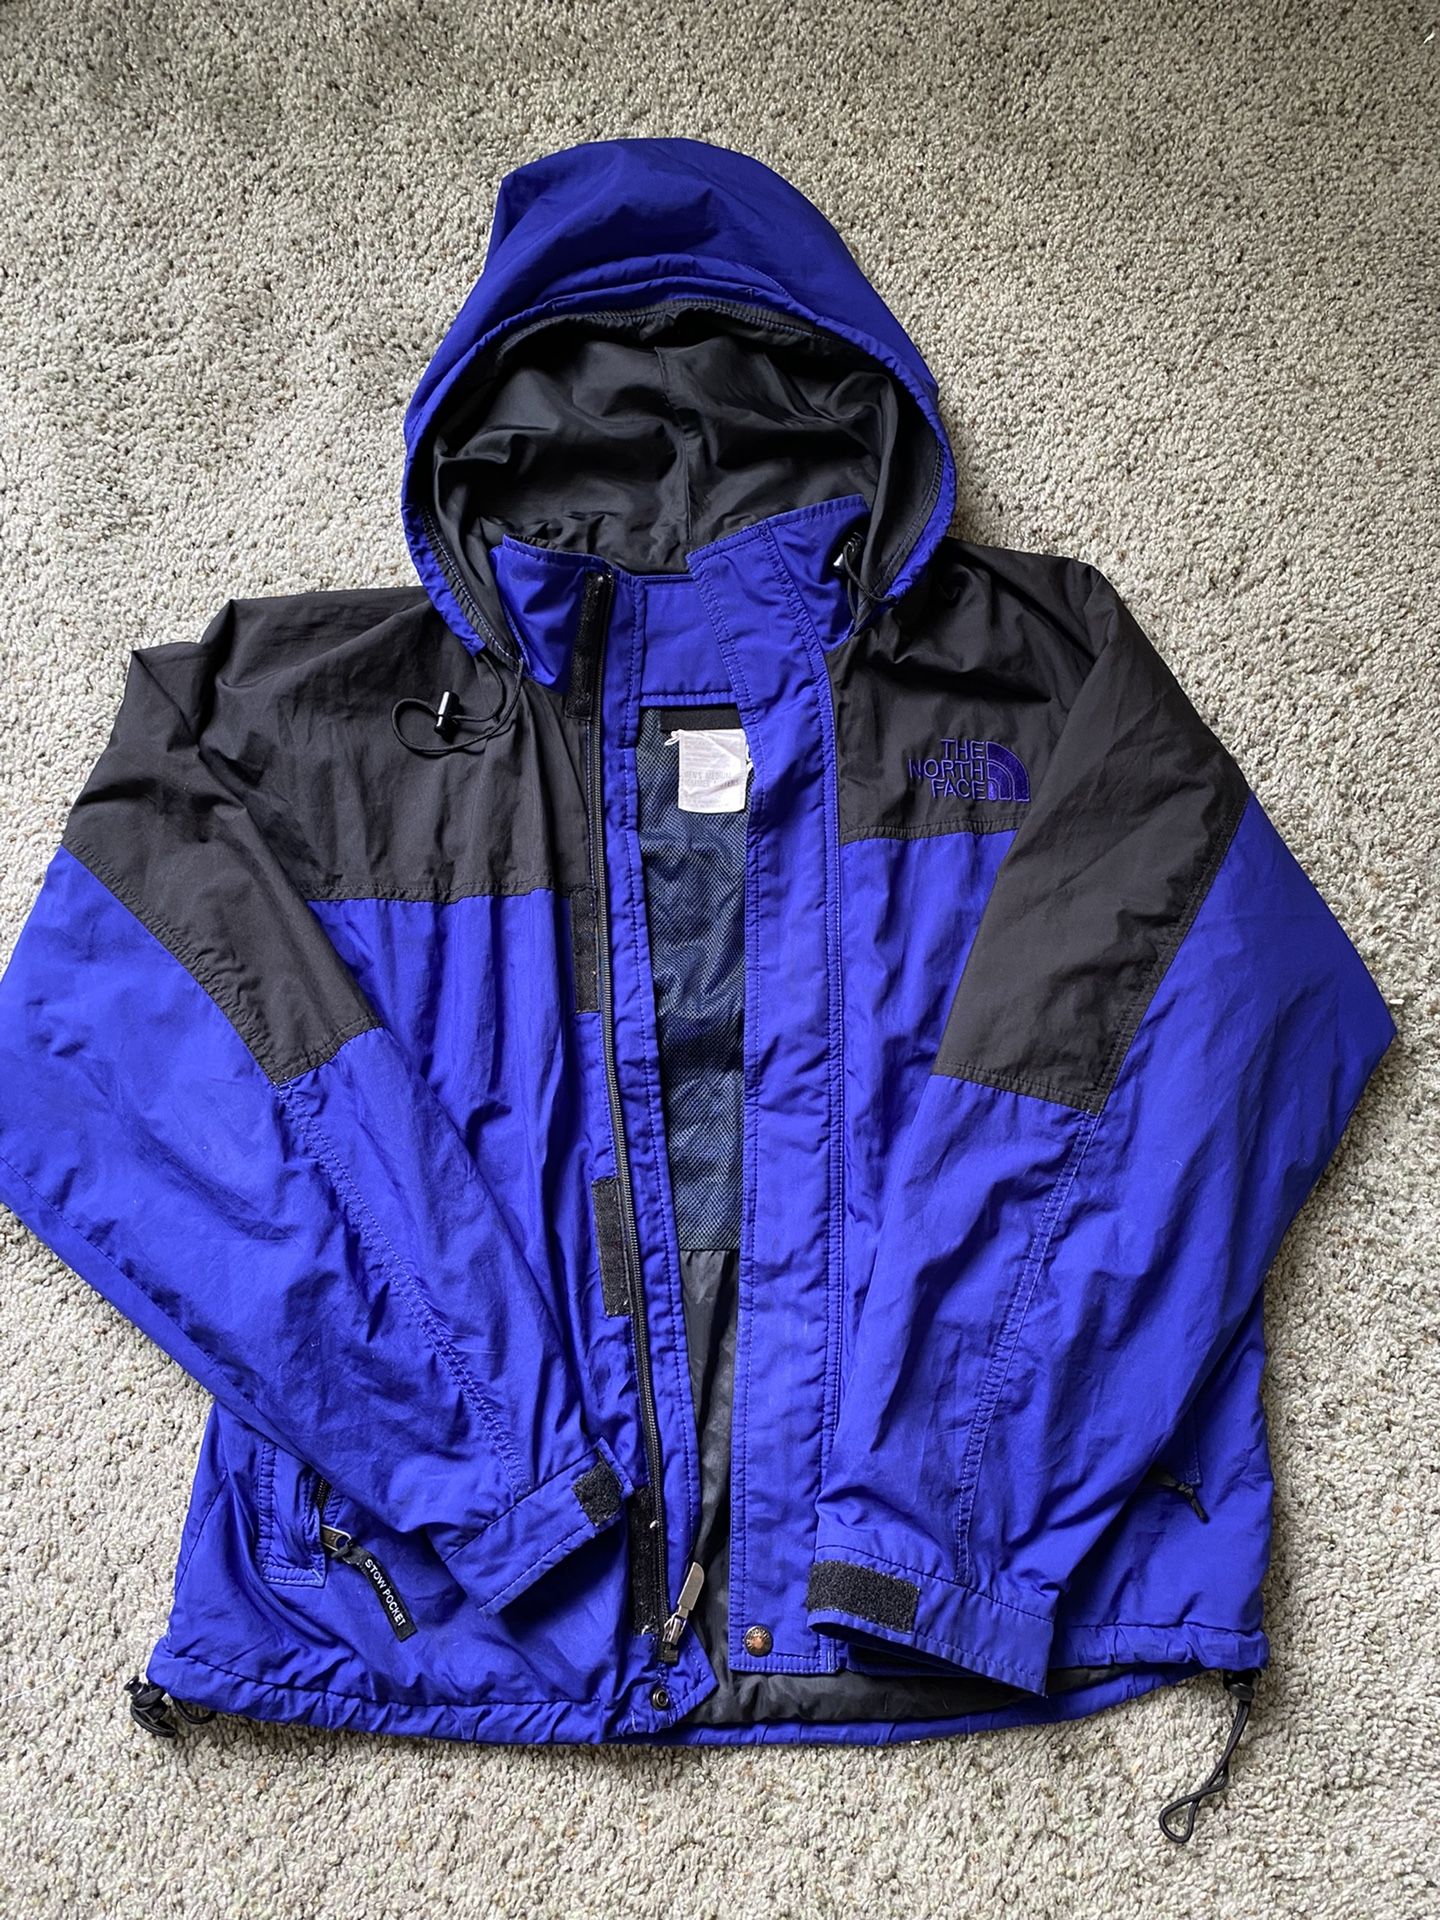 North Face Rain Jacket Vintage 